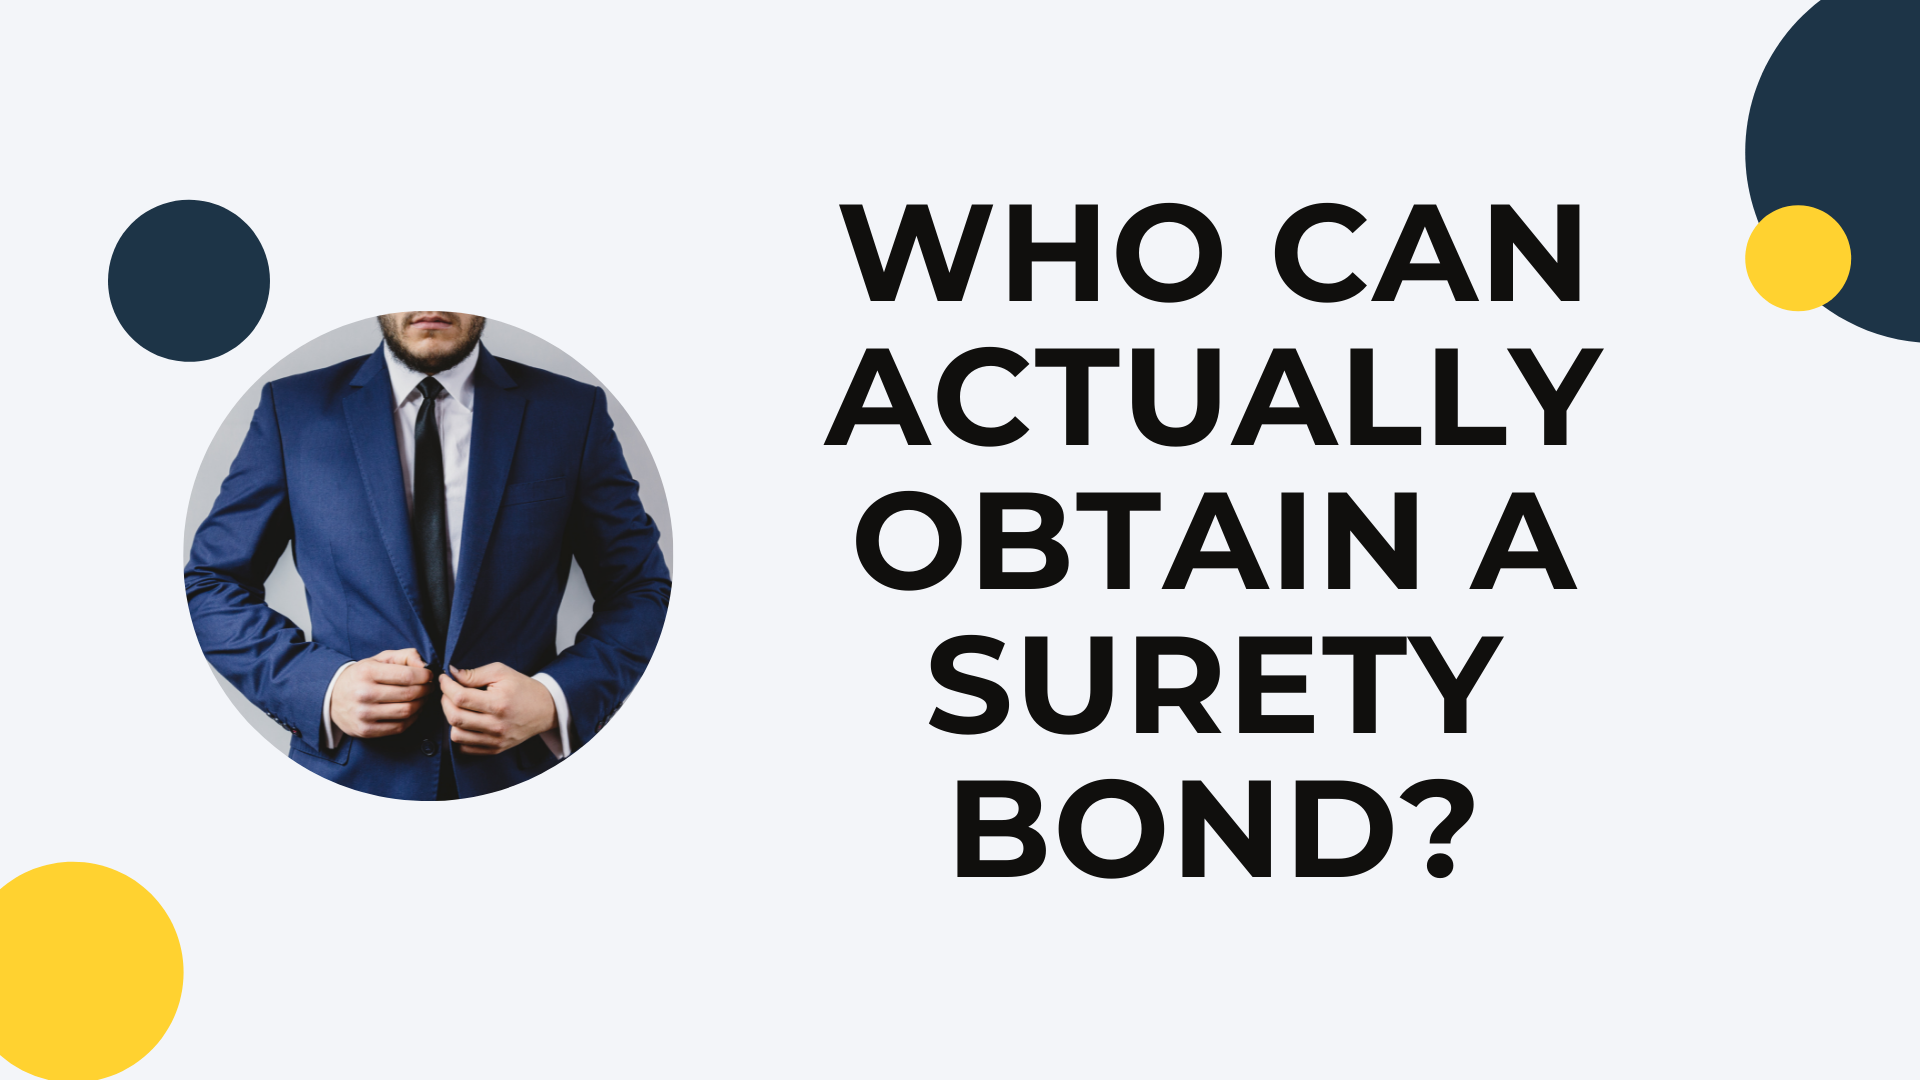 surety bond - Who can obtain a surety bond - man in suit